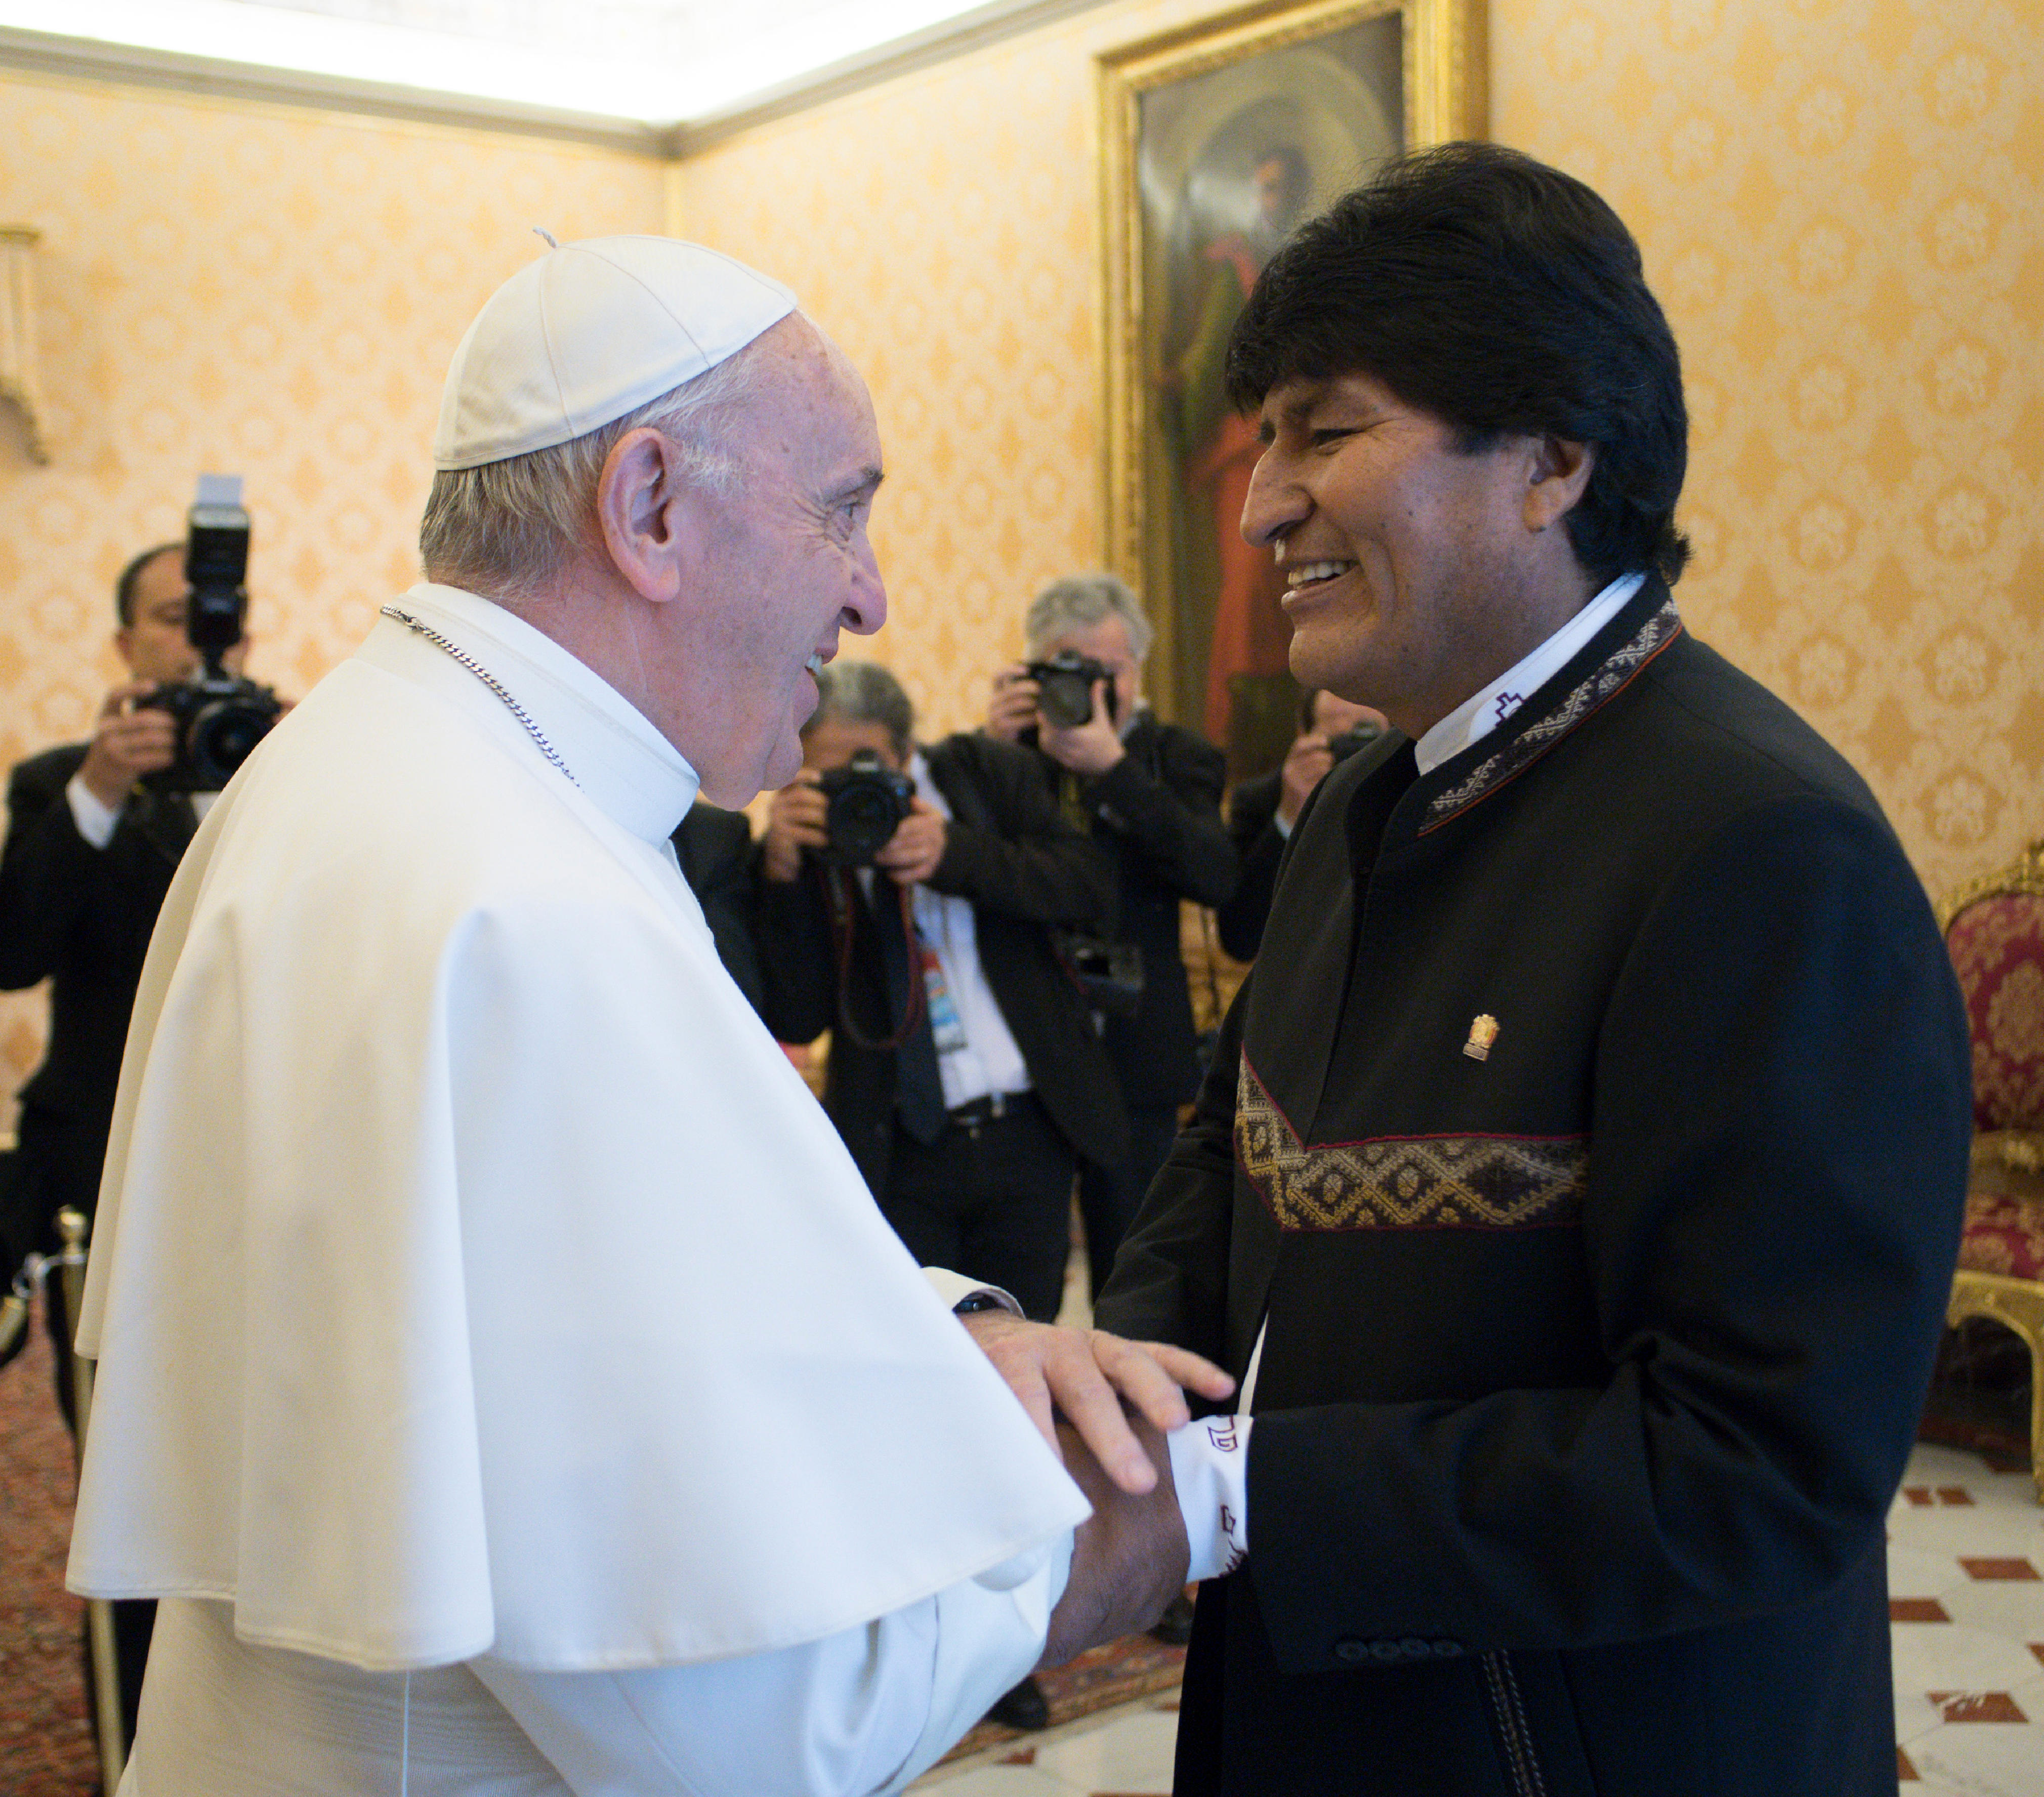 El Santo Padre con el presidente de Bolivia © L'Osservatore Romano